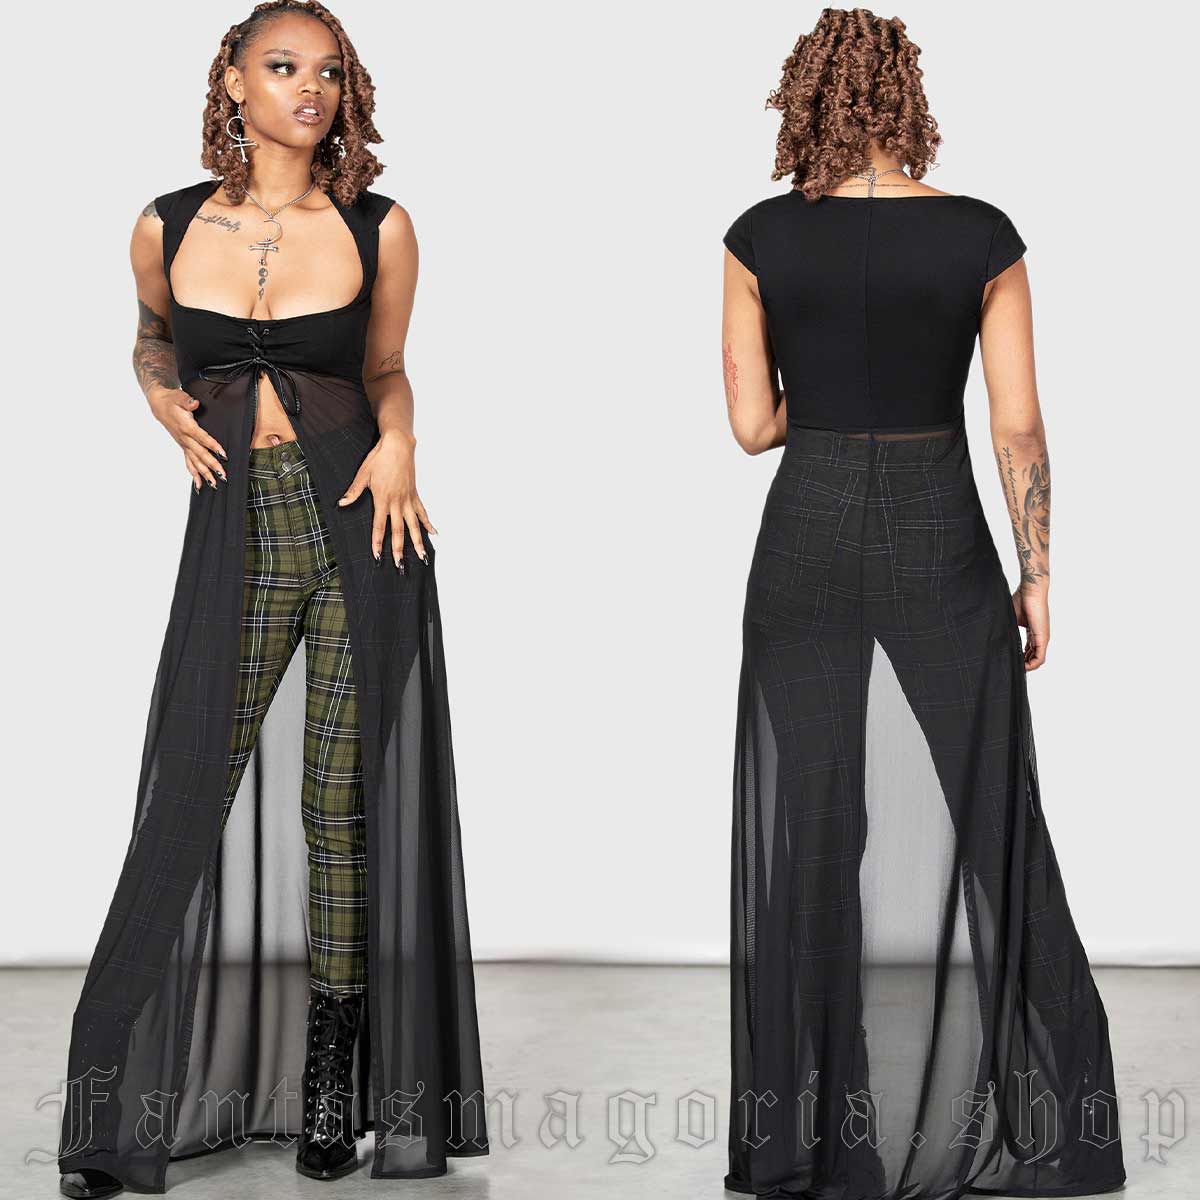 Women's Gothic black sleeveless square neckline mesh tunic top. Killstar KSRA008787